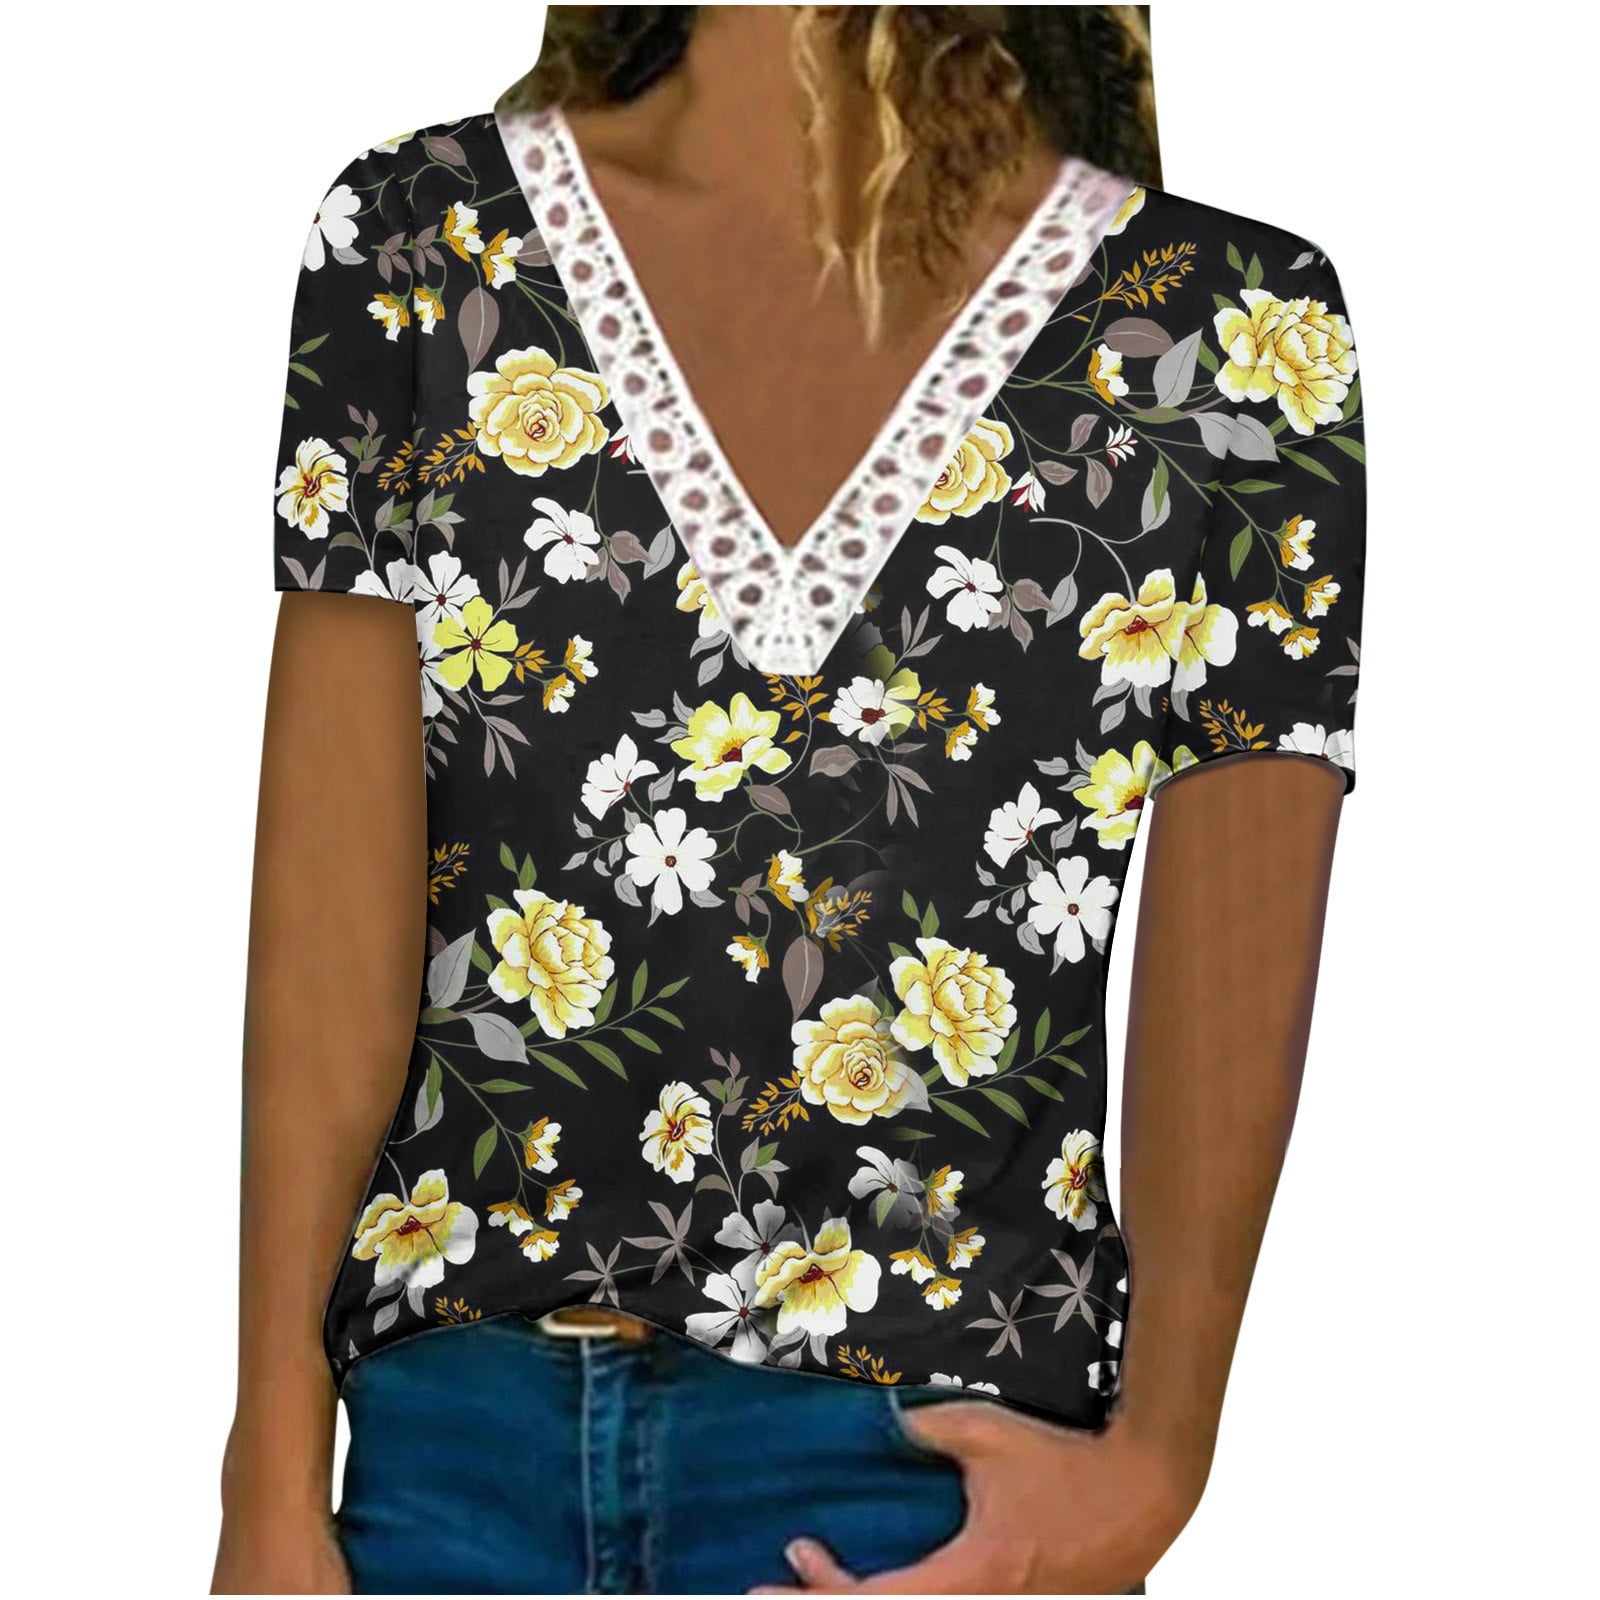 HAPIMO Women's Fashion Shirts Floral Print Tops Round Neck T-shirt